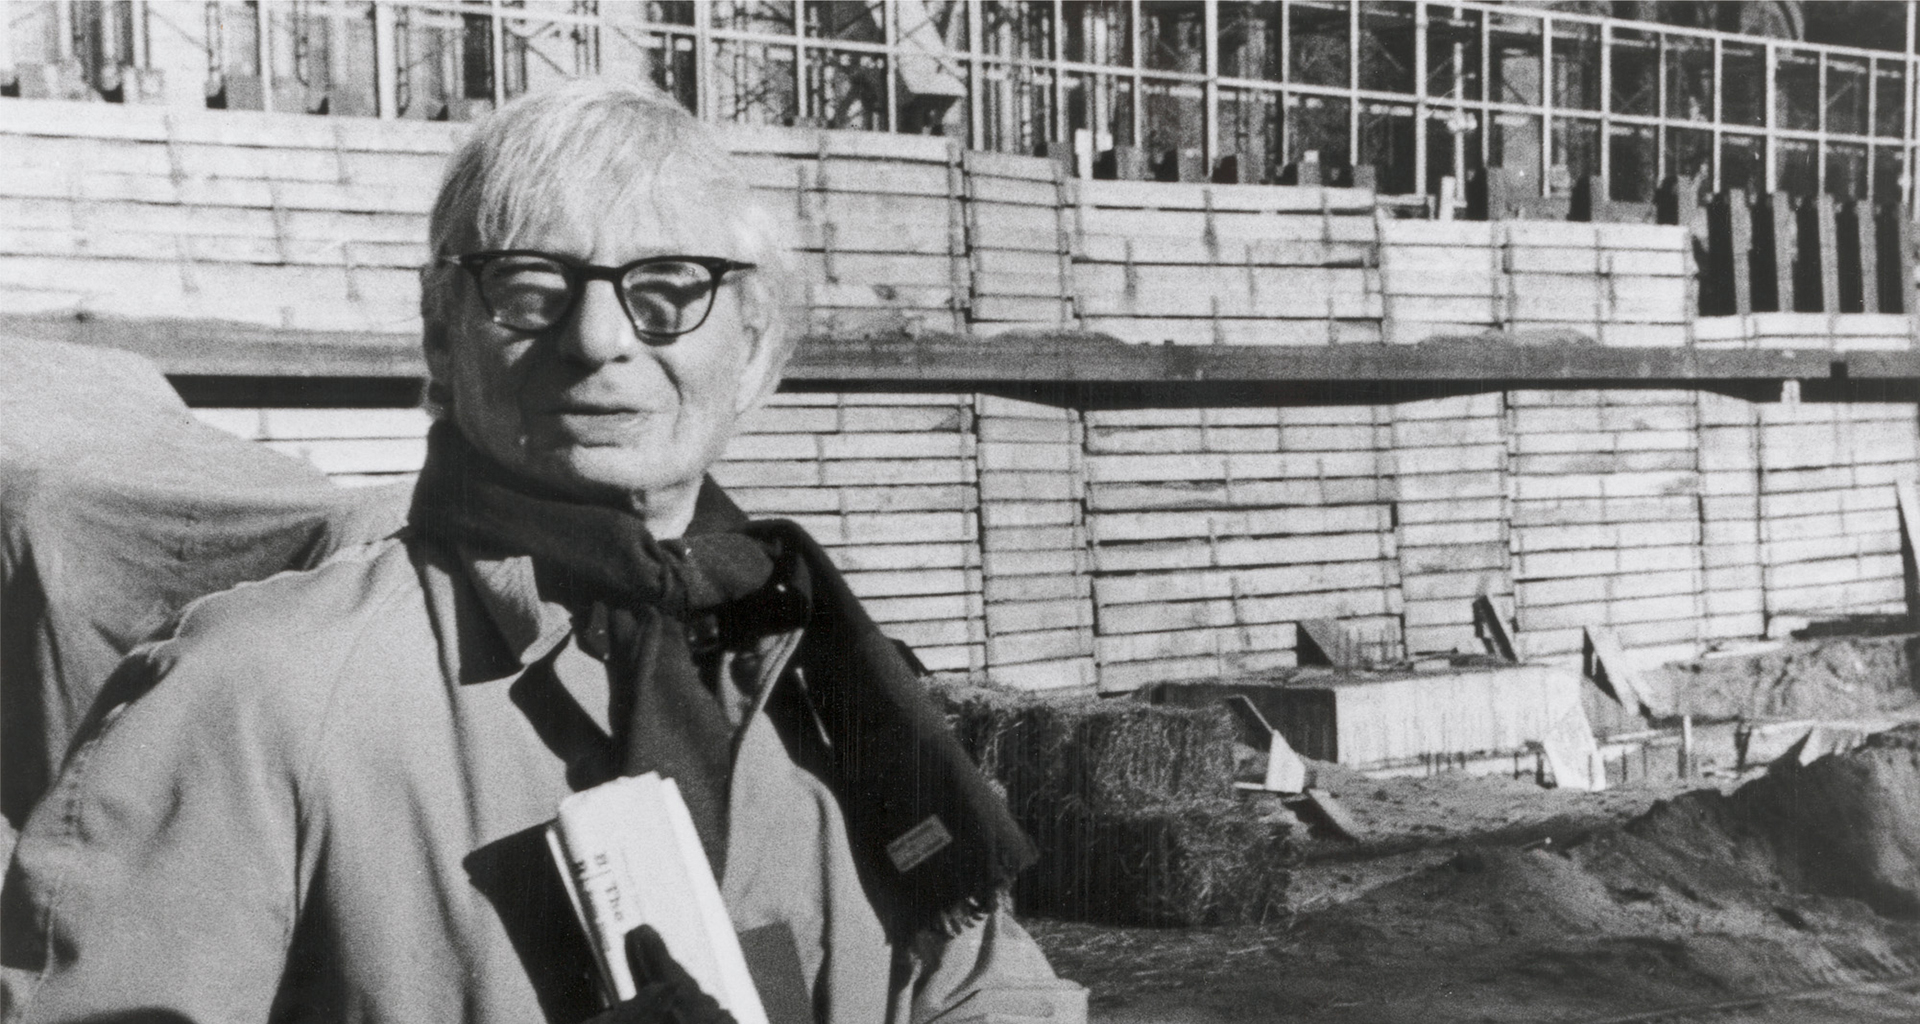 Yale restores Louis Kahn's vision for his Modernist landmark